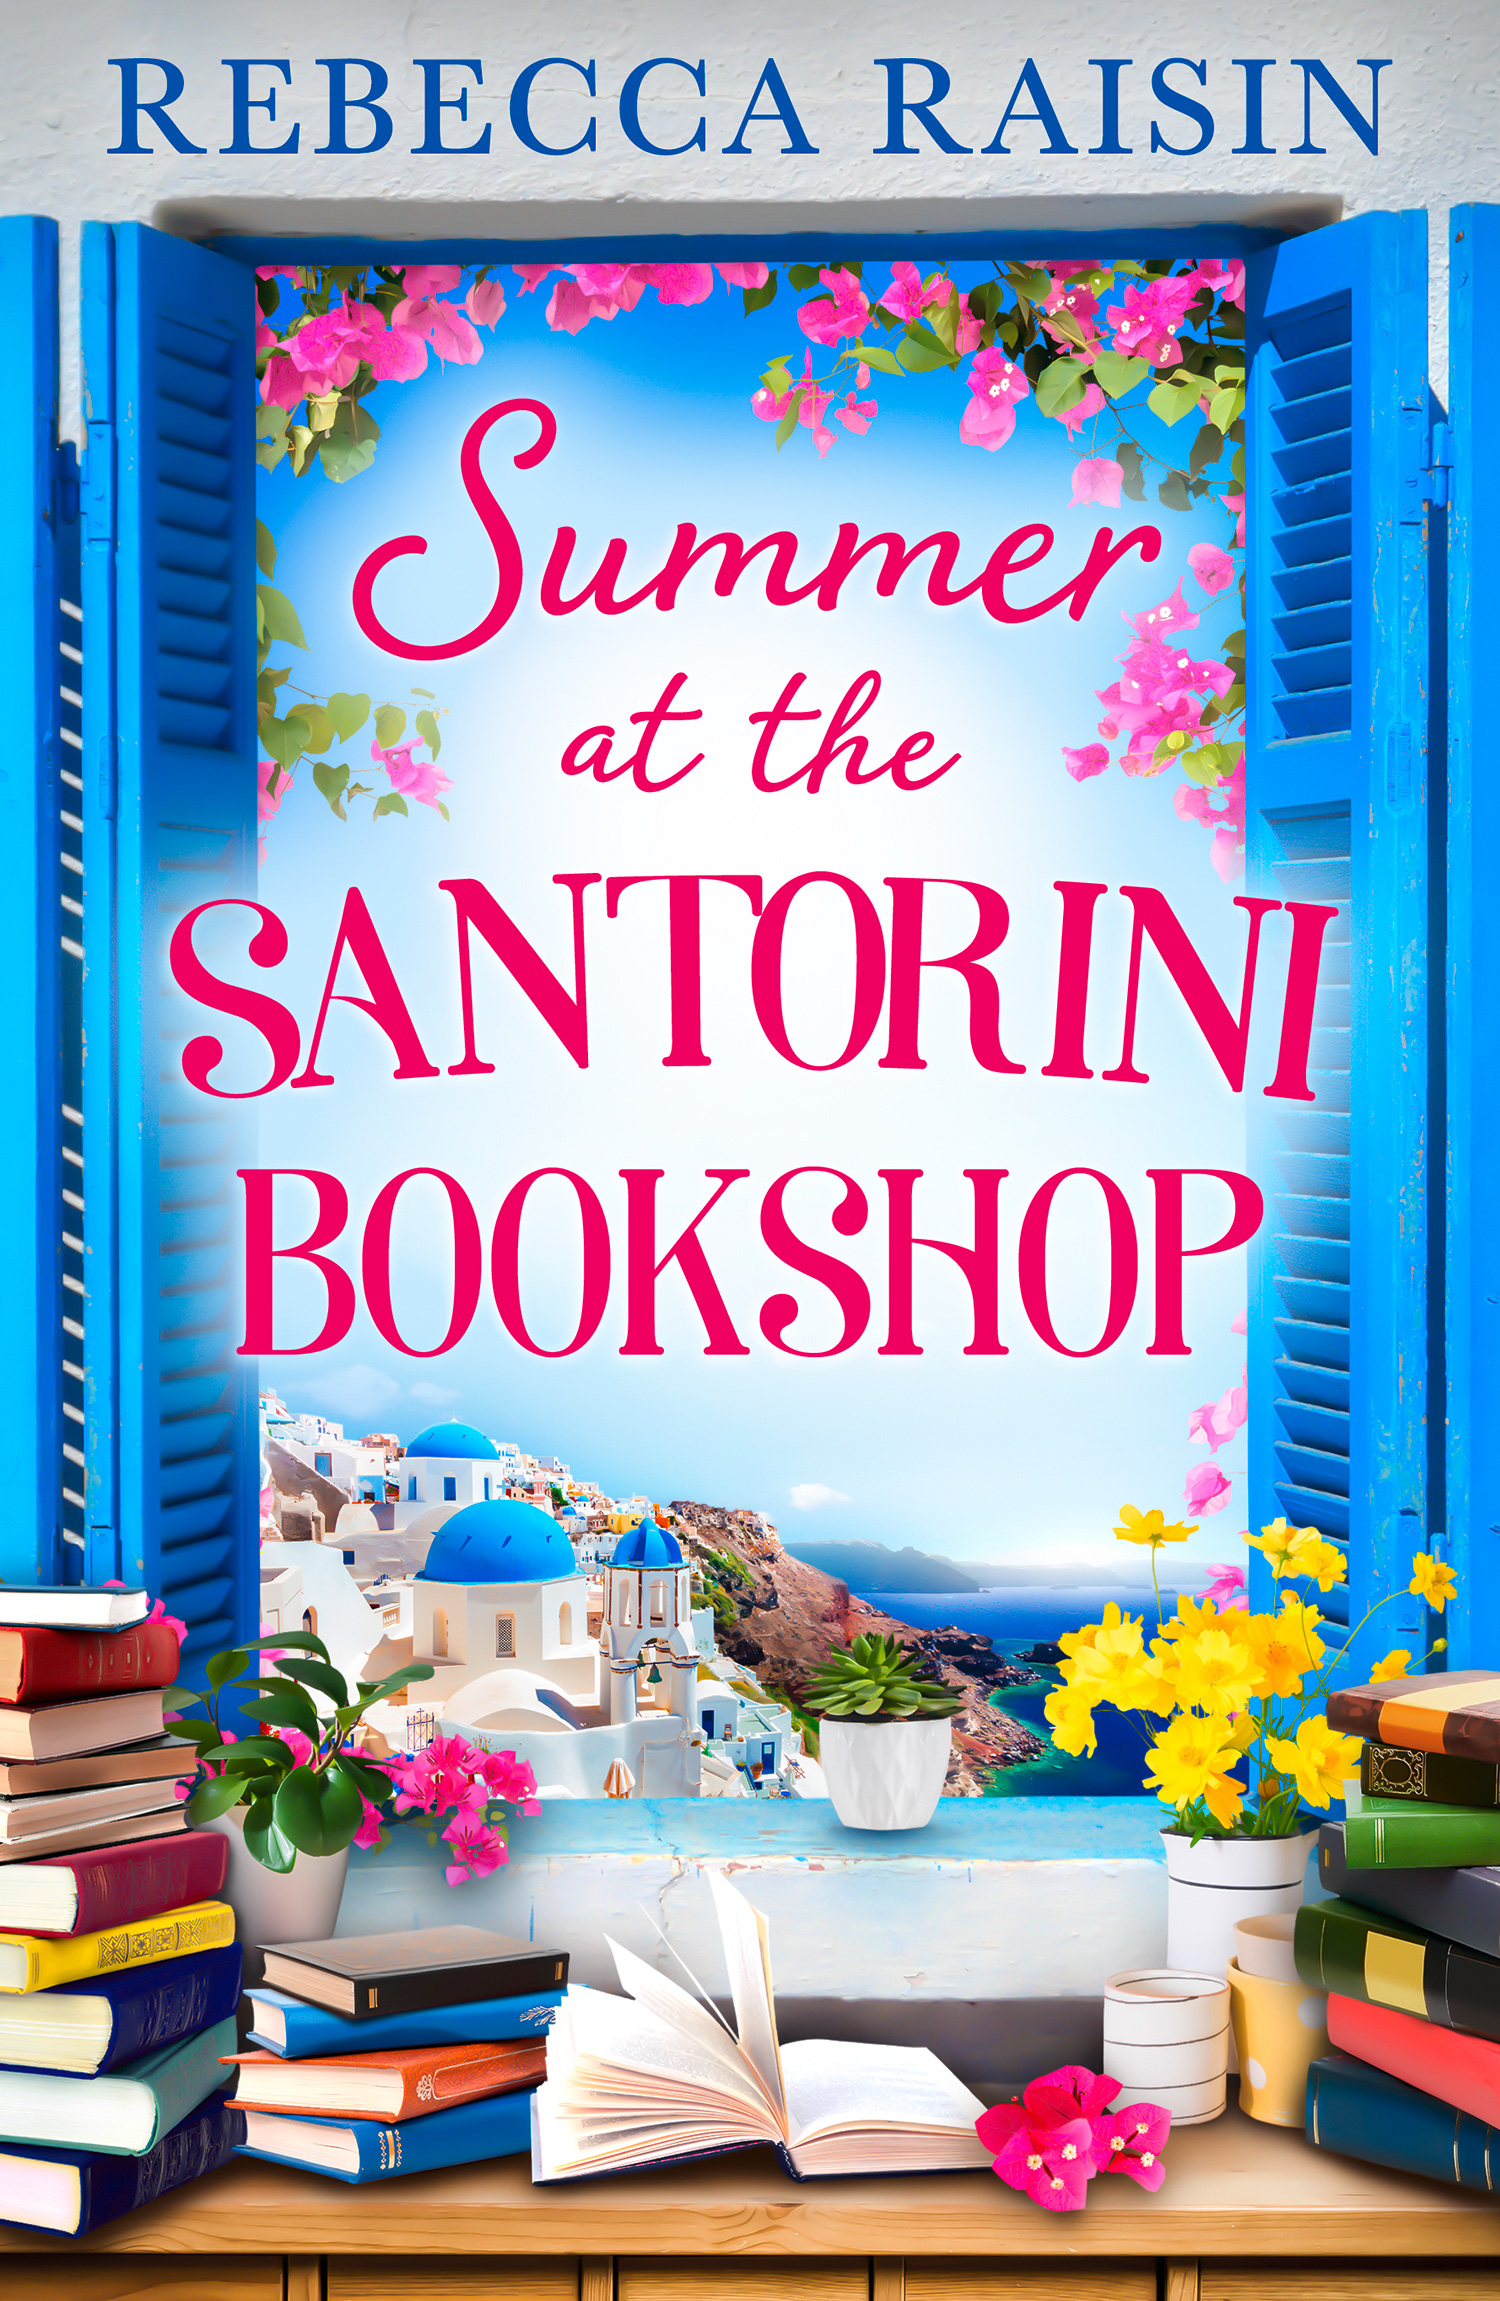 Summer at the Santorini Bookshop cover image